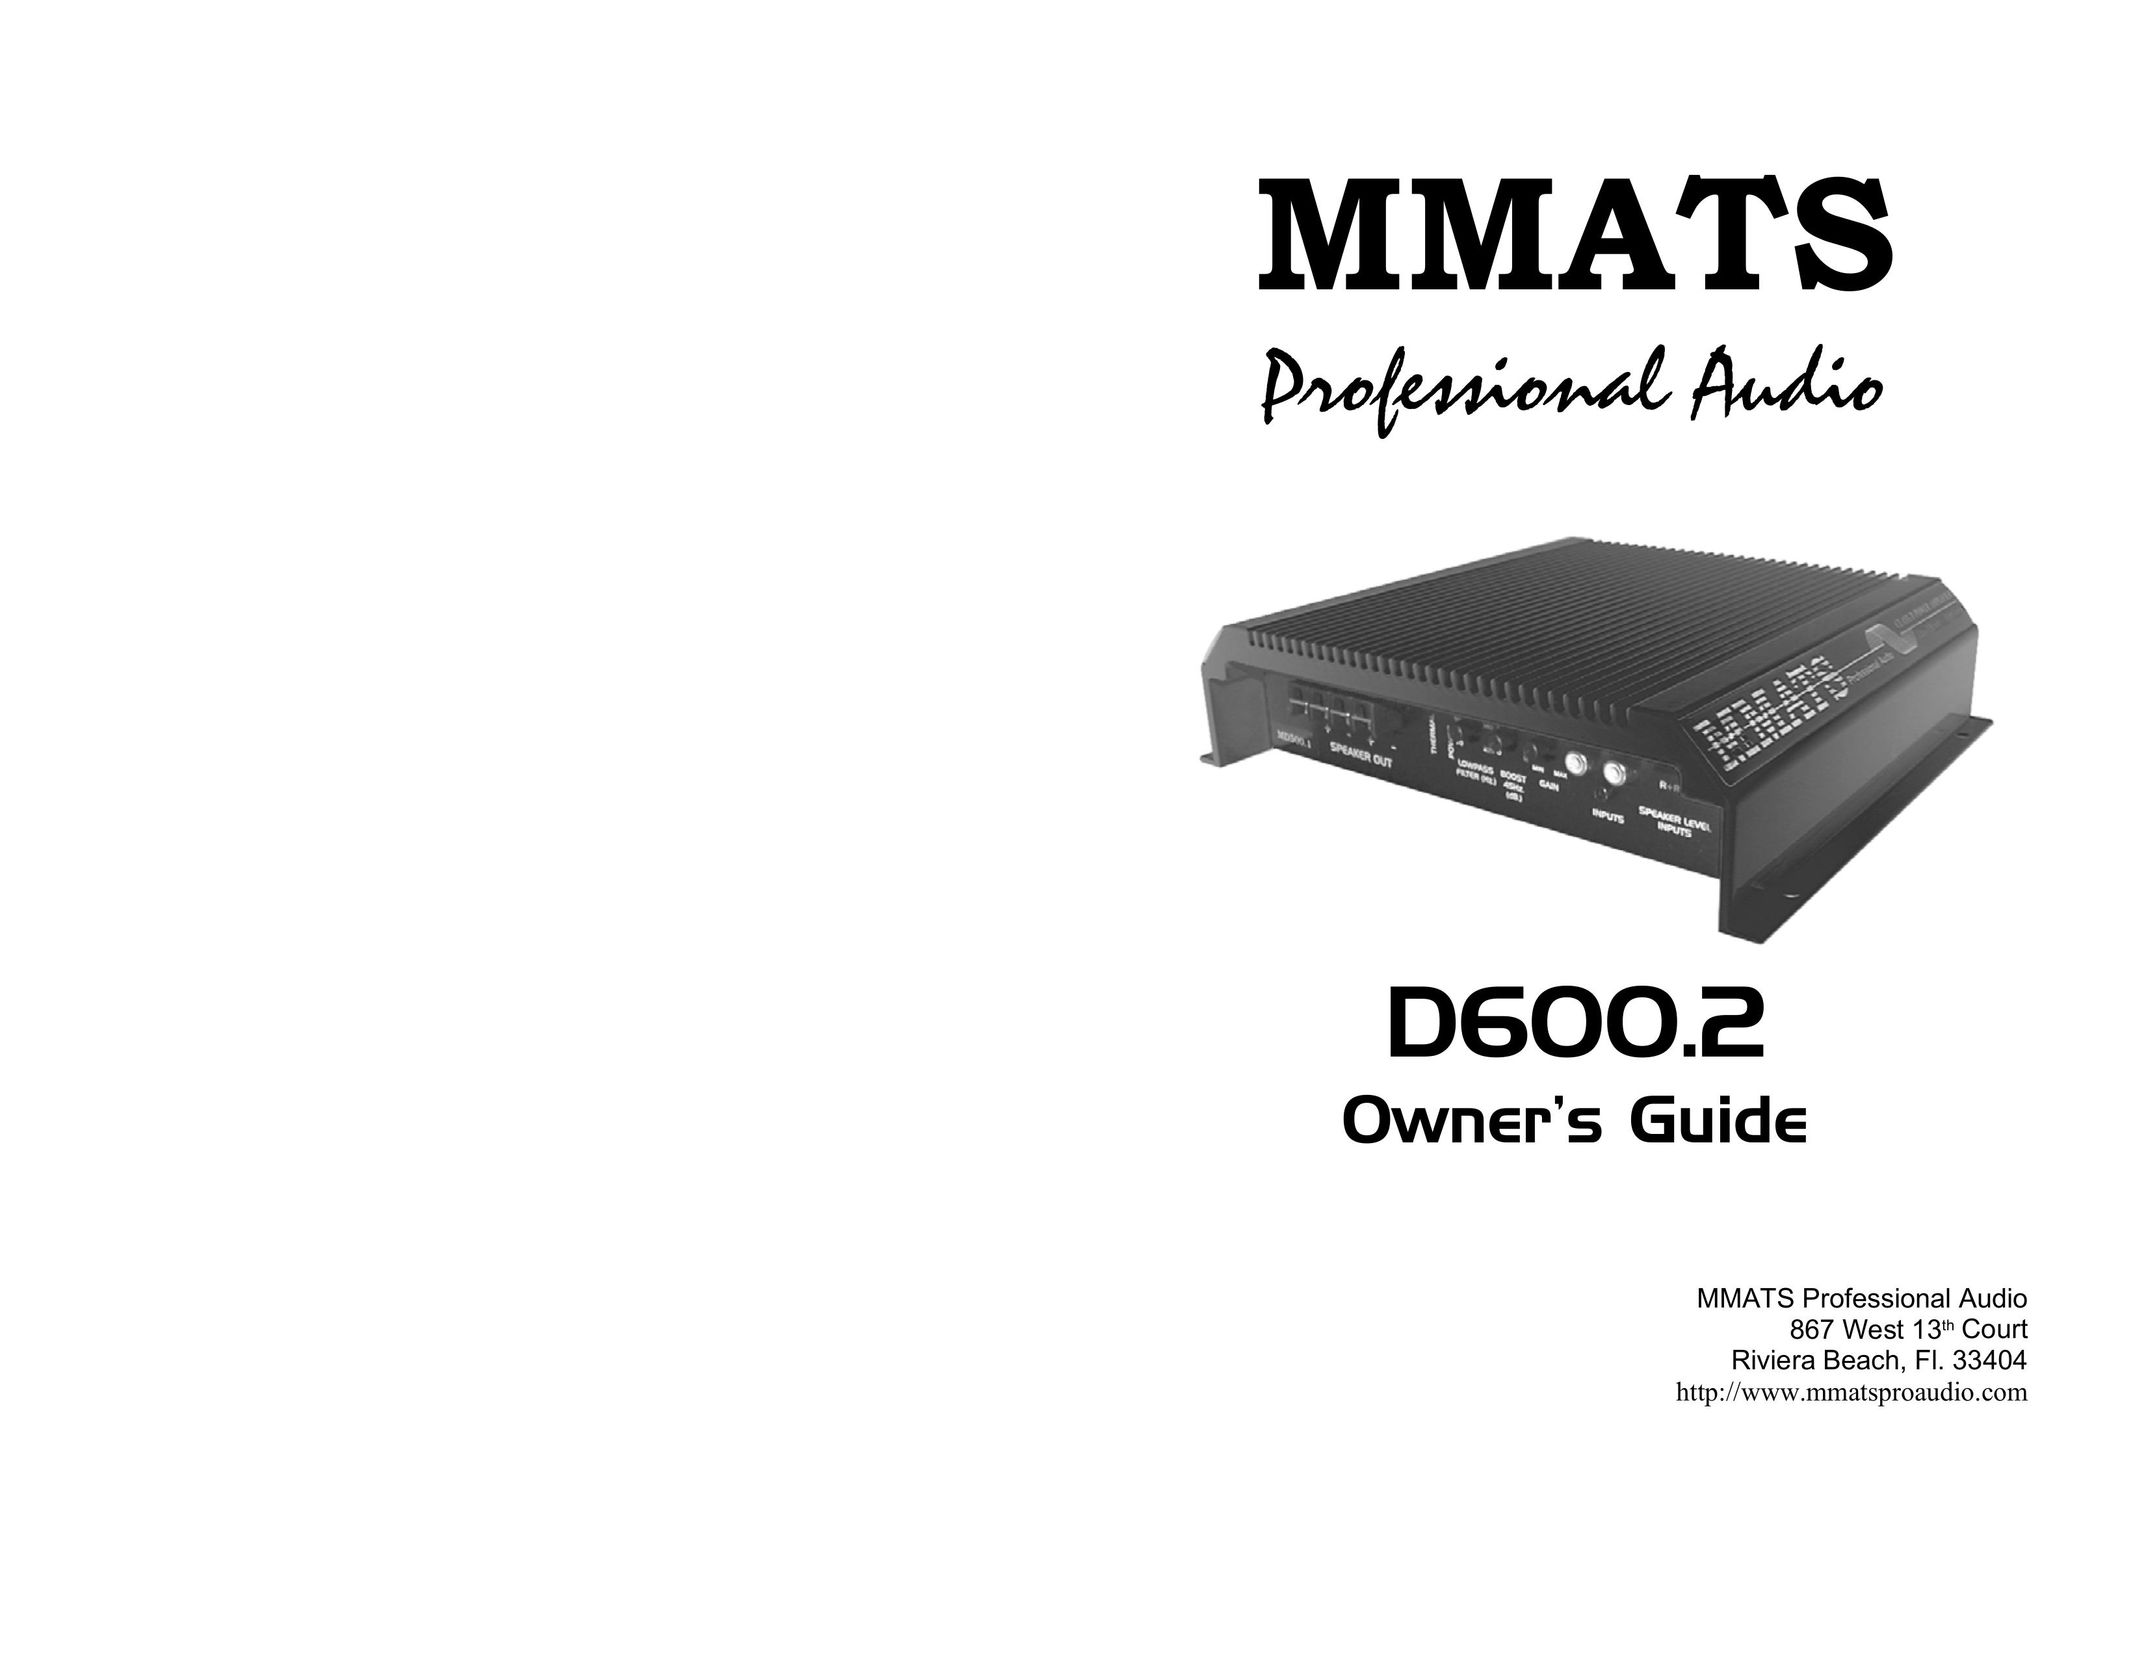 MMATS Professional Audio D600.2 Car Amplifier User Manual